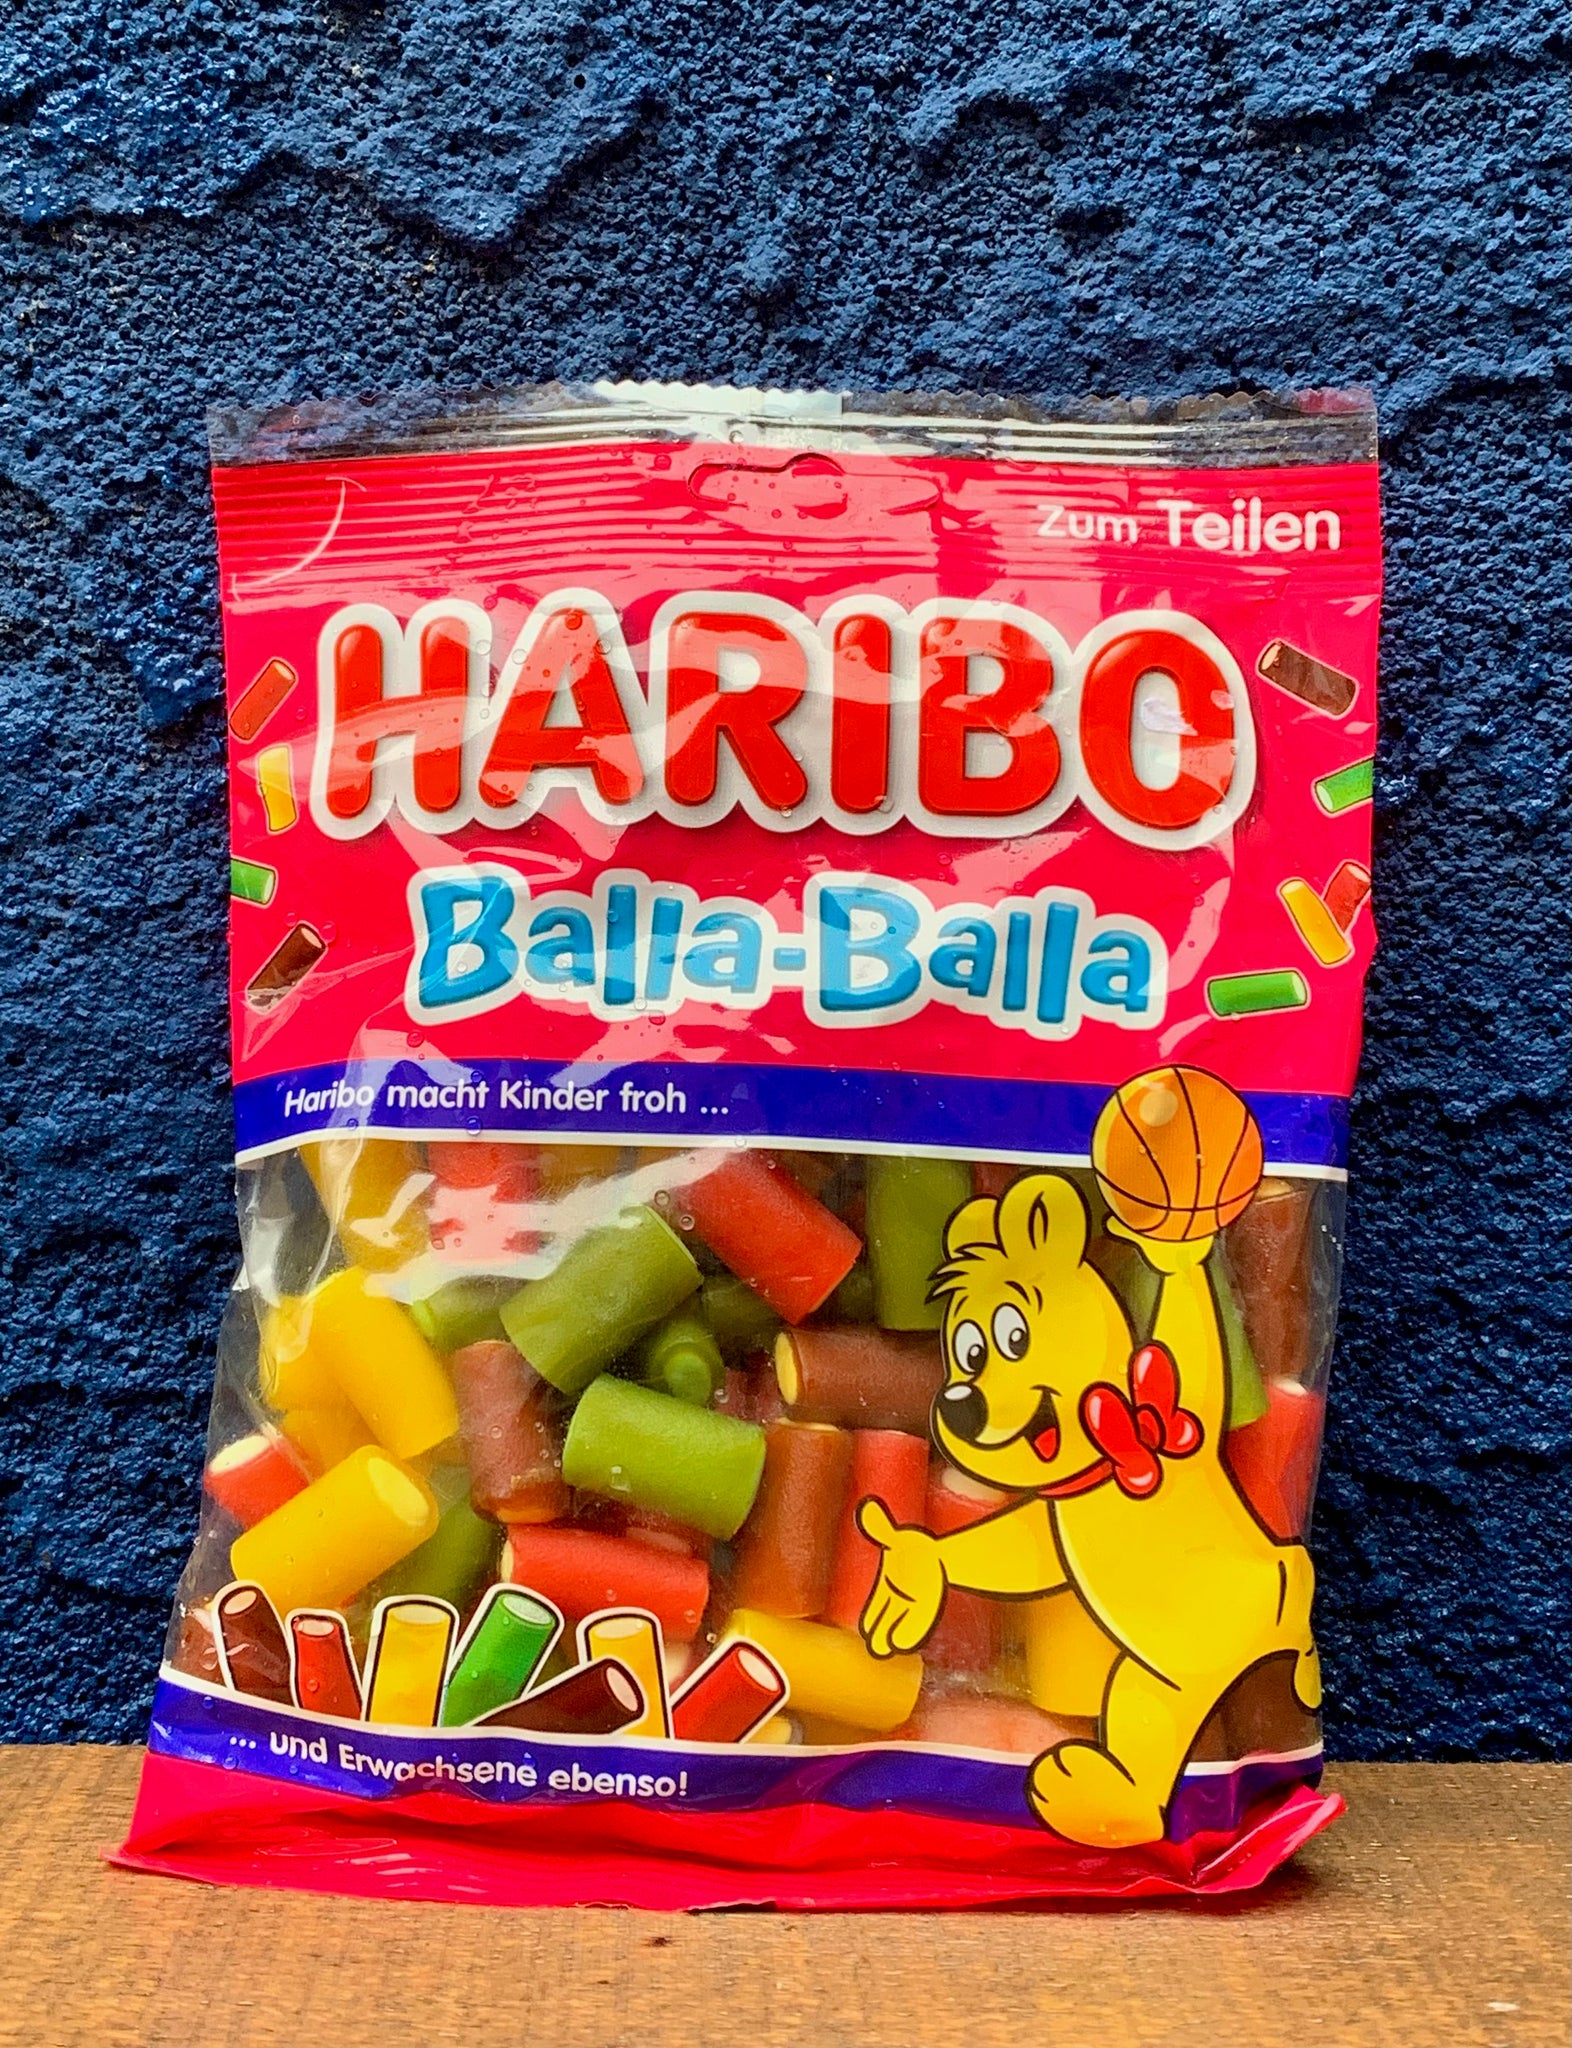 Haribo Balla Bites Fruit flavour gummies sweet Share Bag 160g